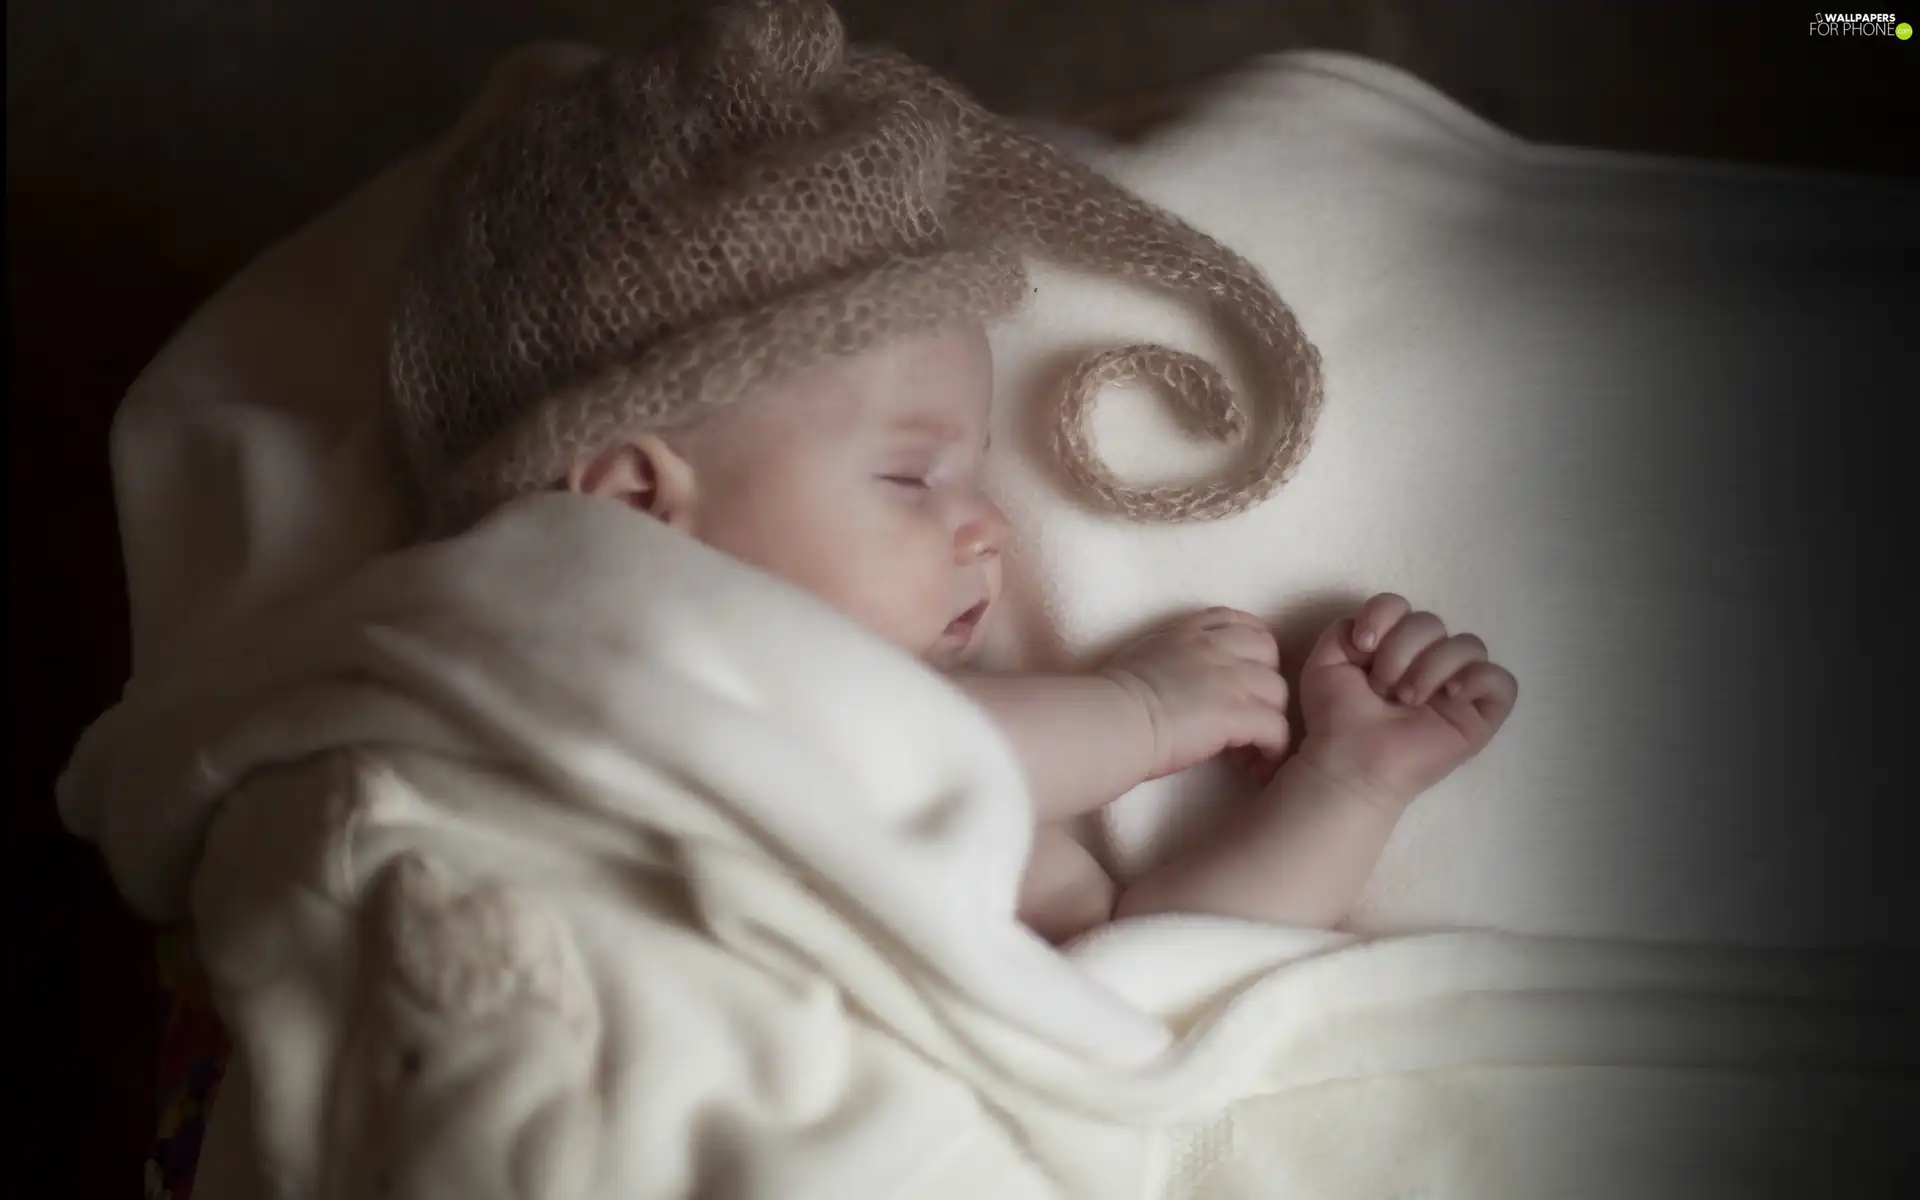 Hat, Sleeping, Baby